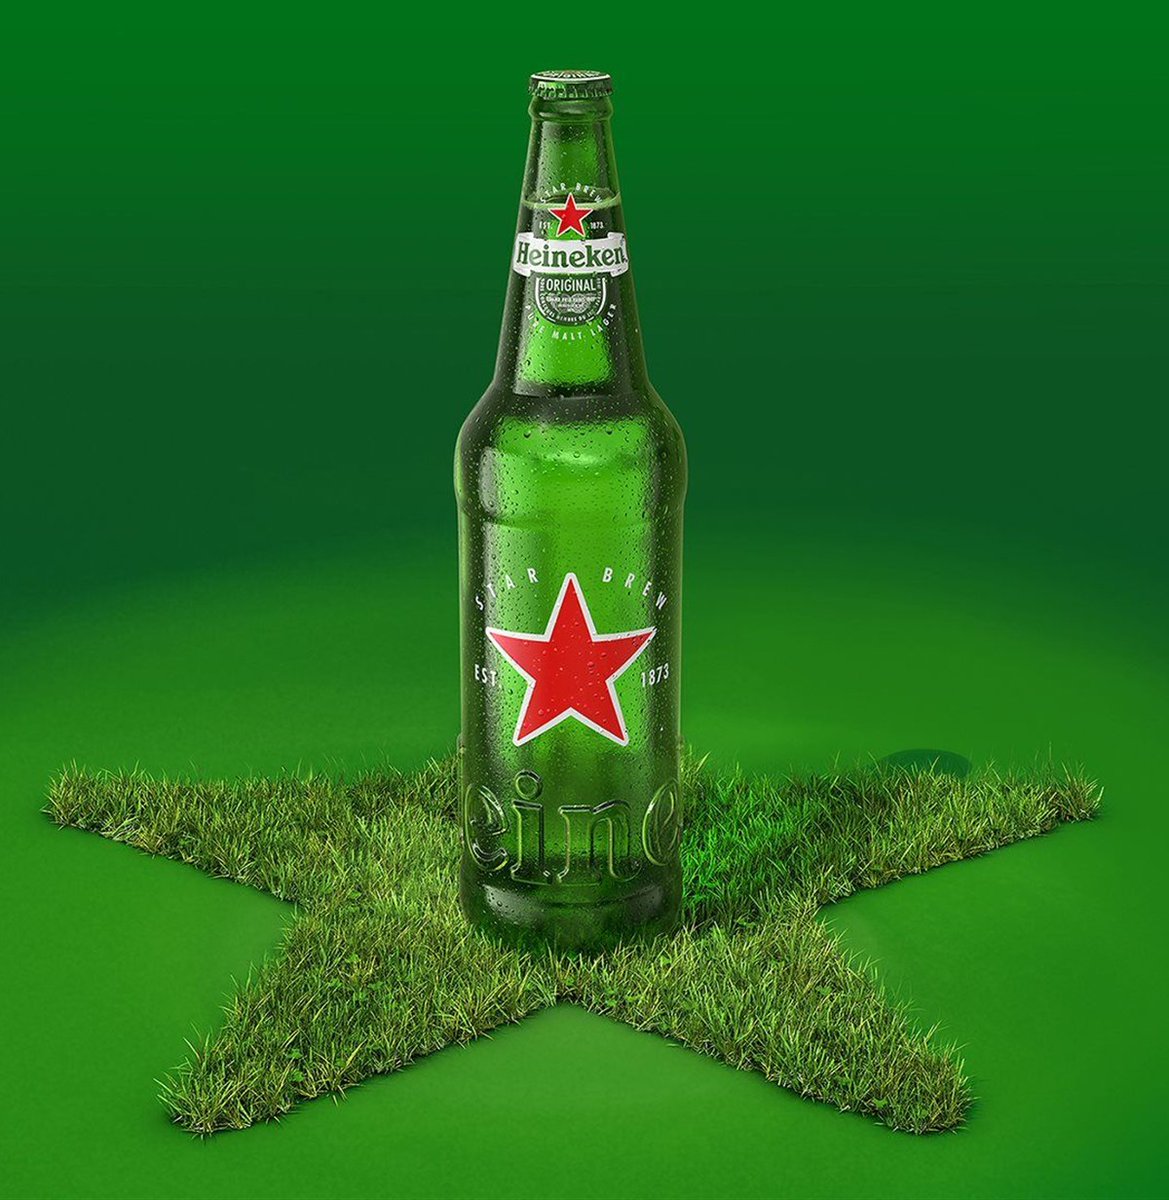 Heineken breaks tradition with new returnable 'Star Bottle' design in SA bizcommunity.com/article/heinek… via @Biz_Retail @Heineken_SA #HeinekenStarBottle #EnjoyResponsibly